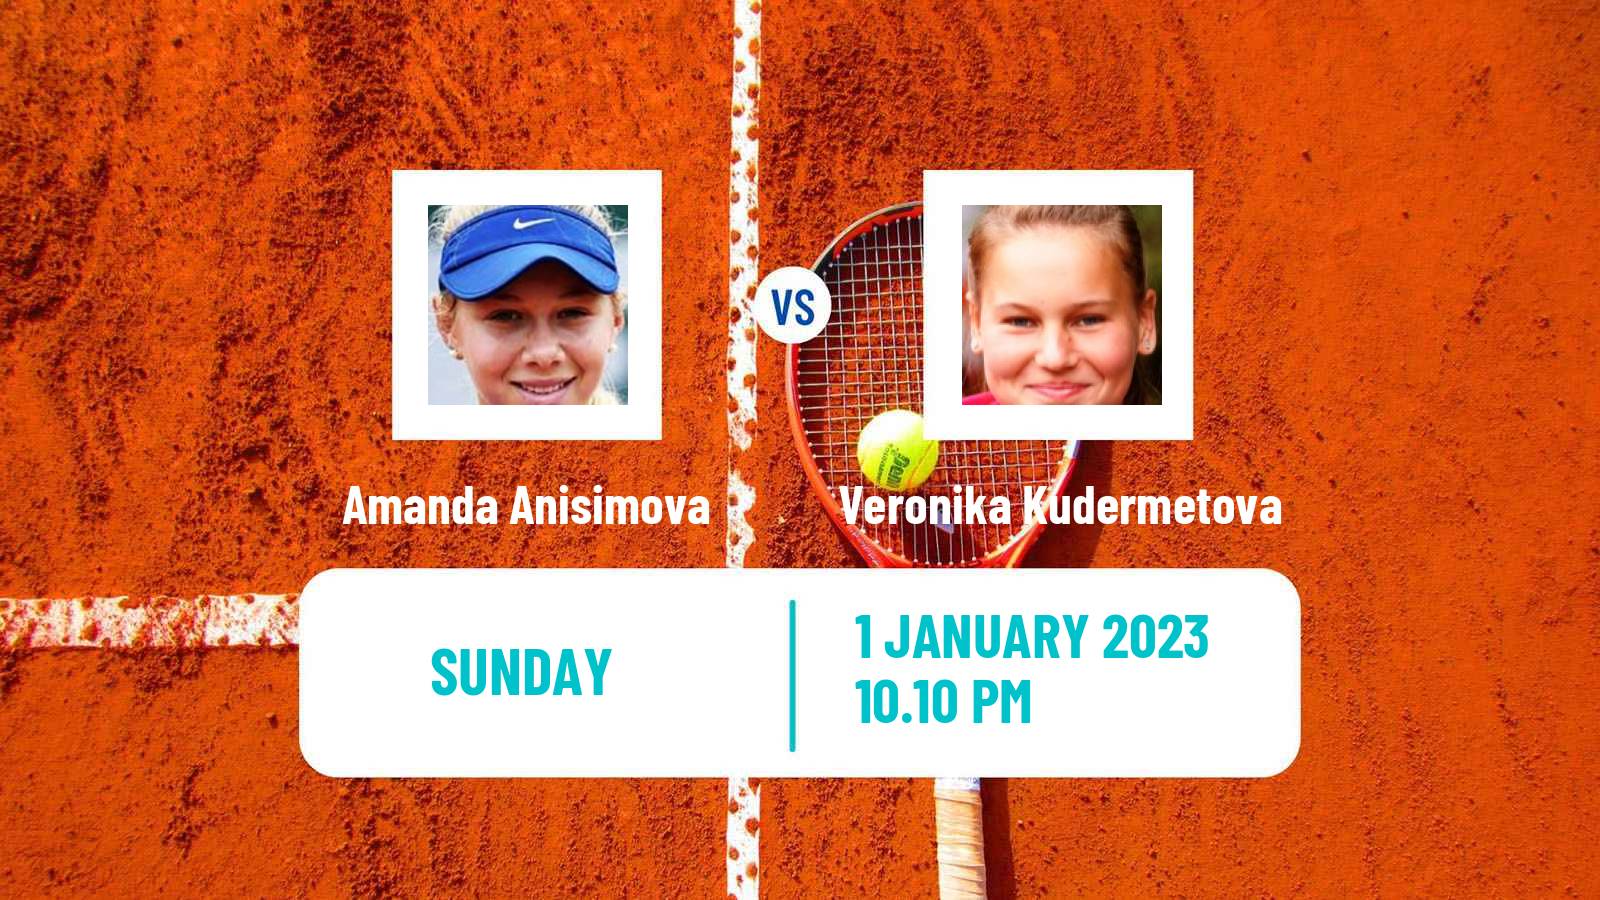 Tennis WTA Adelaide Amanda Anisimova - Veronika Kudermetova